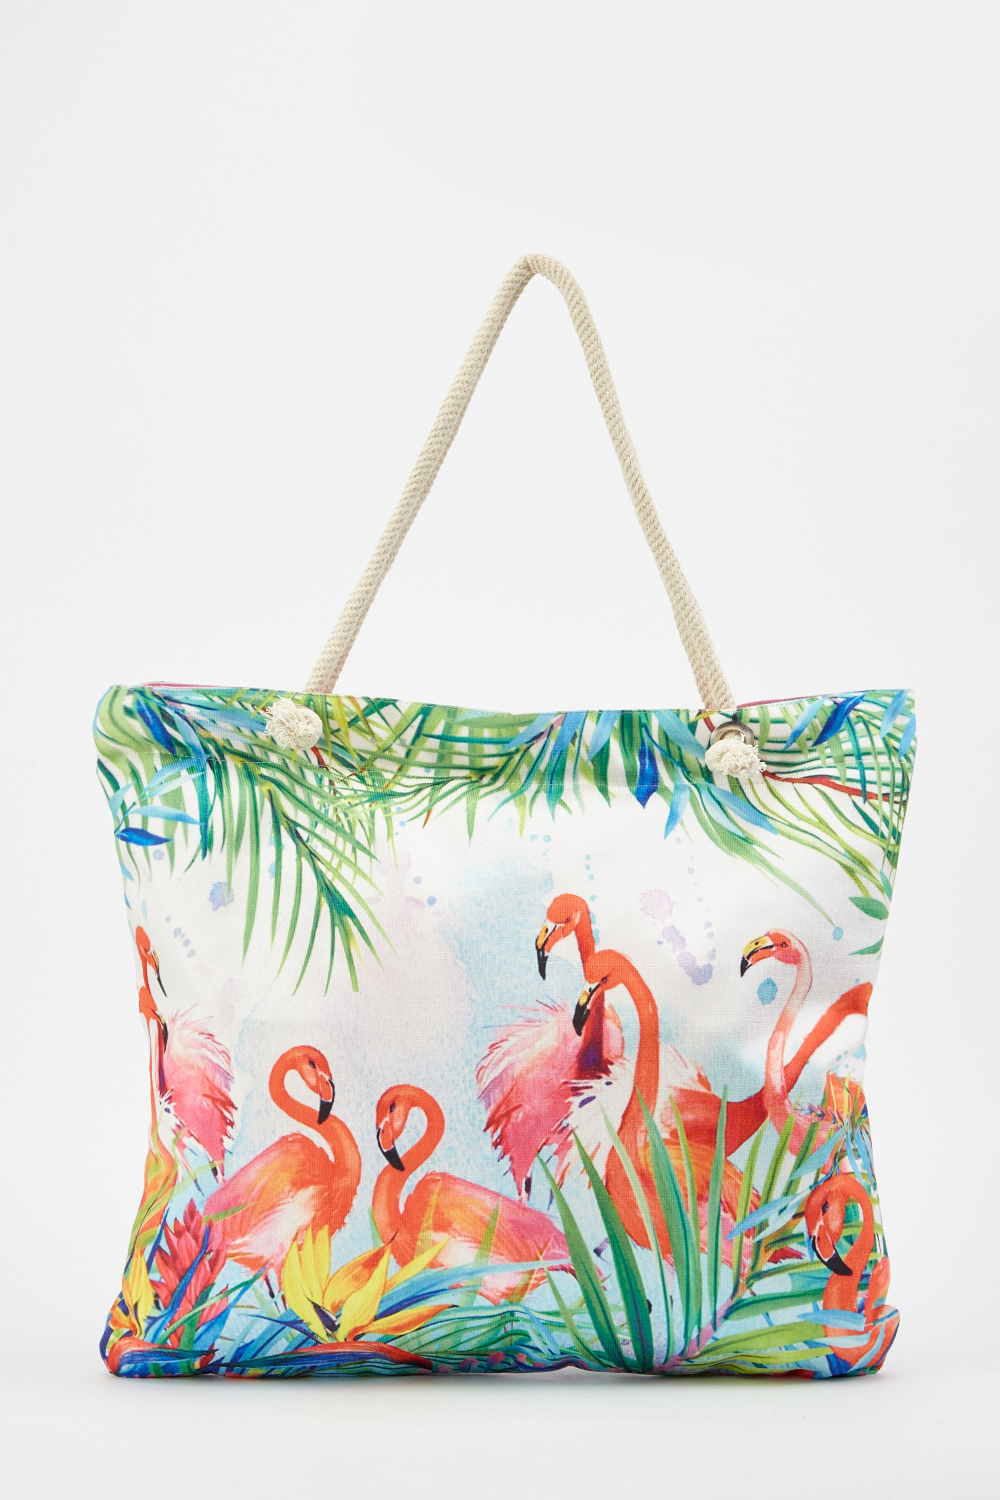 Flamingo Tropical Beach Bag - Just $7